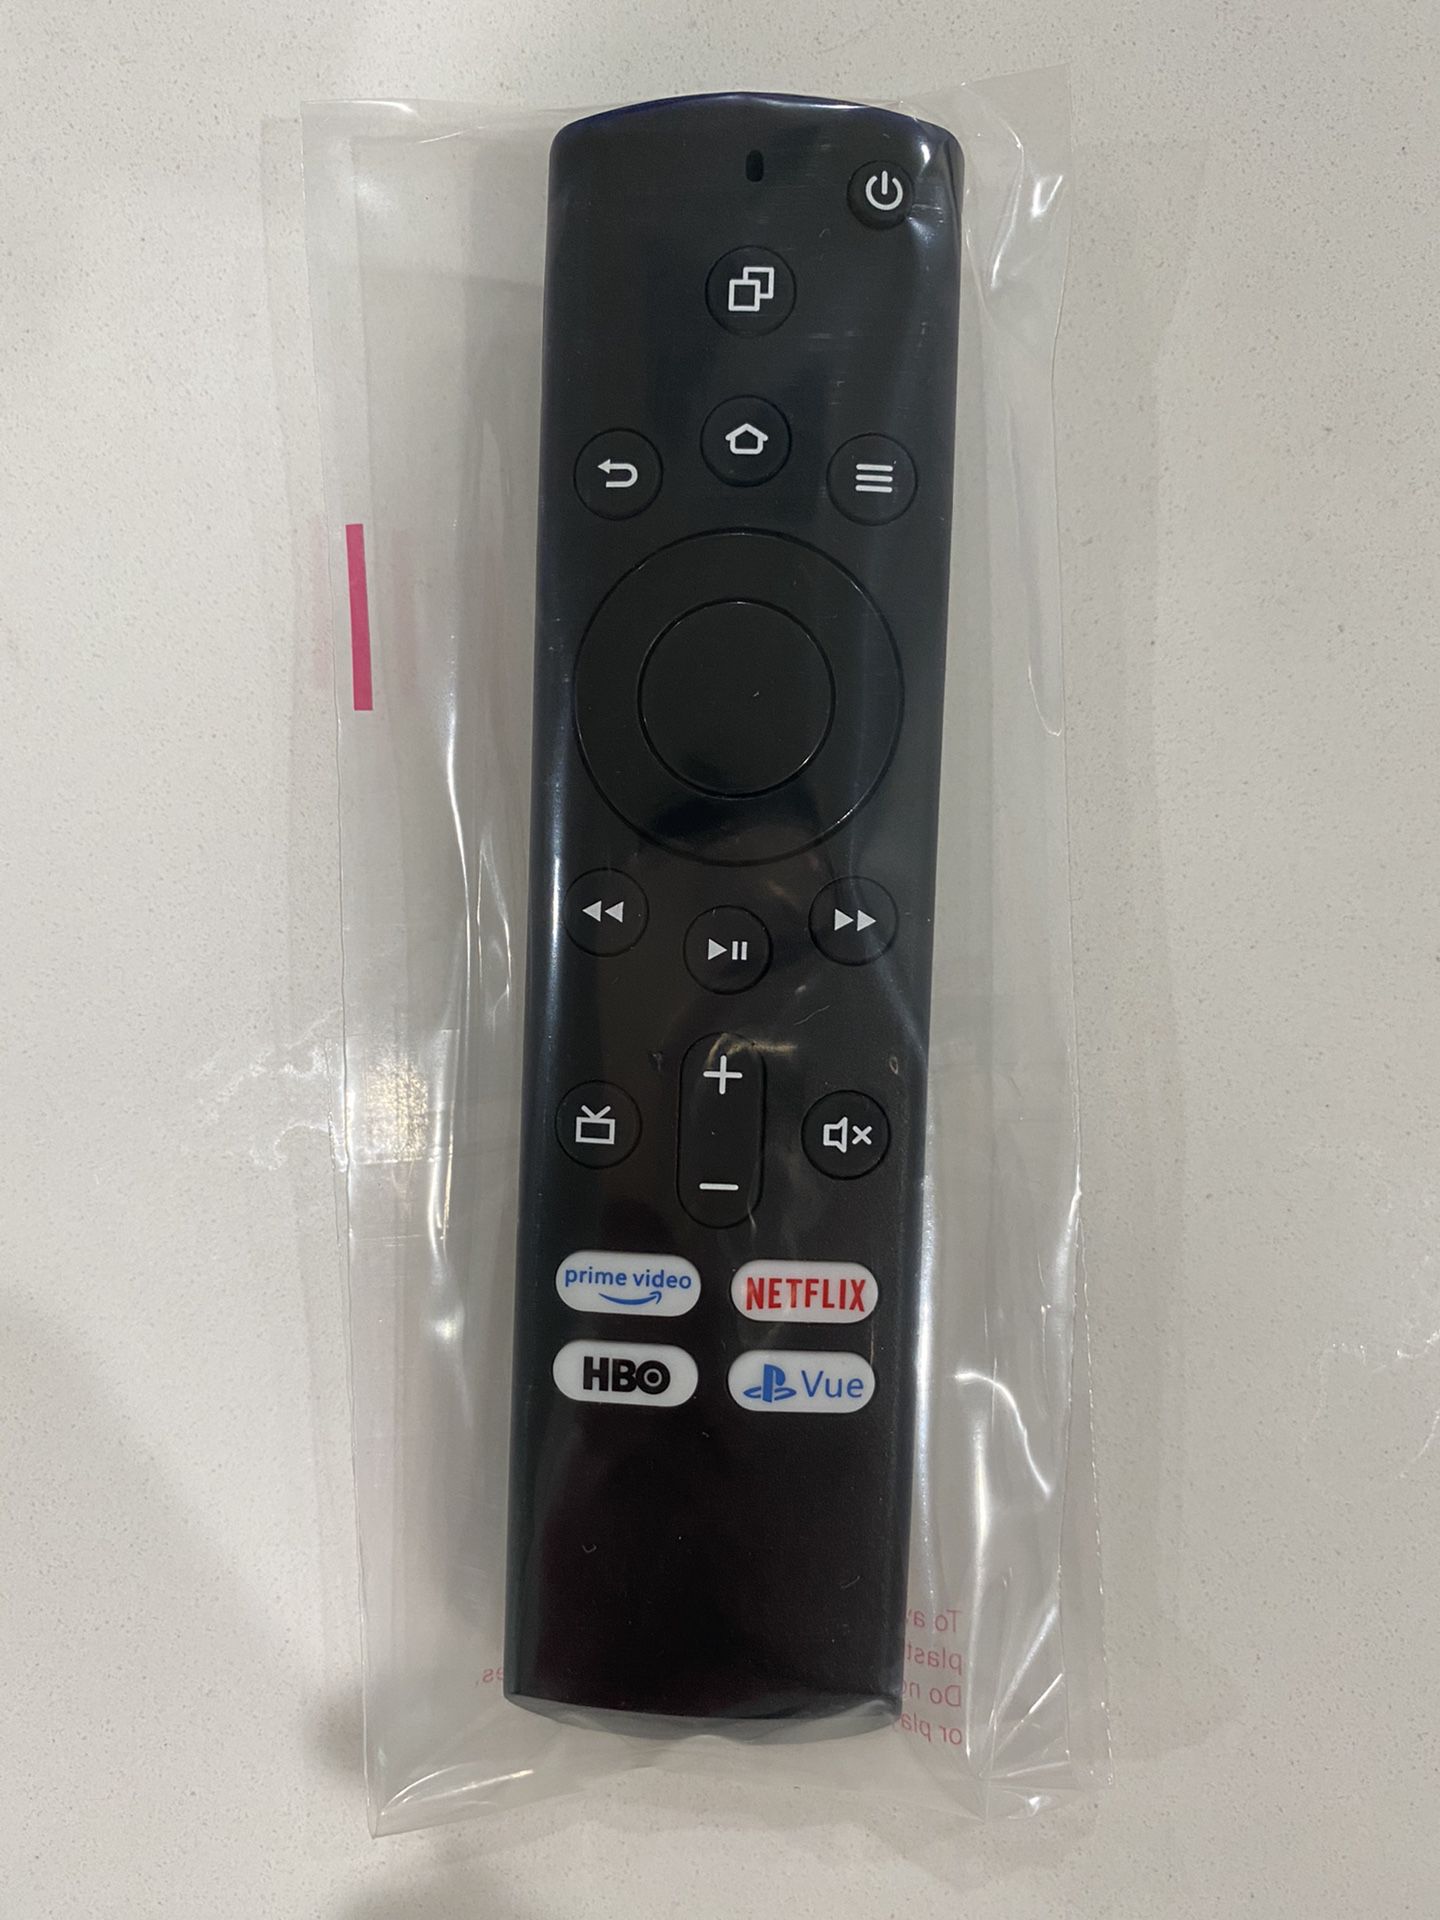 Remote Control replace for Toshiba Fire TV & Insignia Fire TV